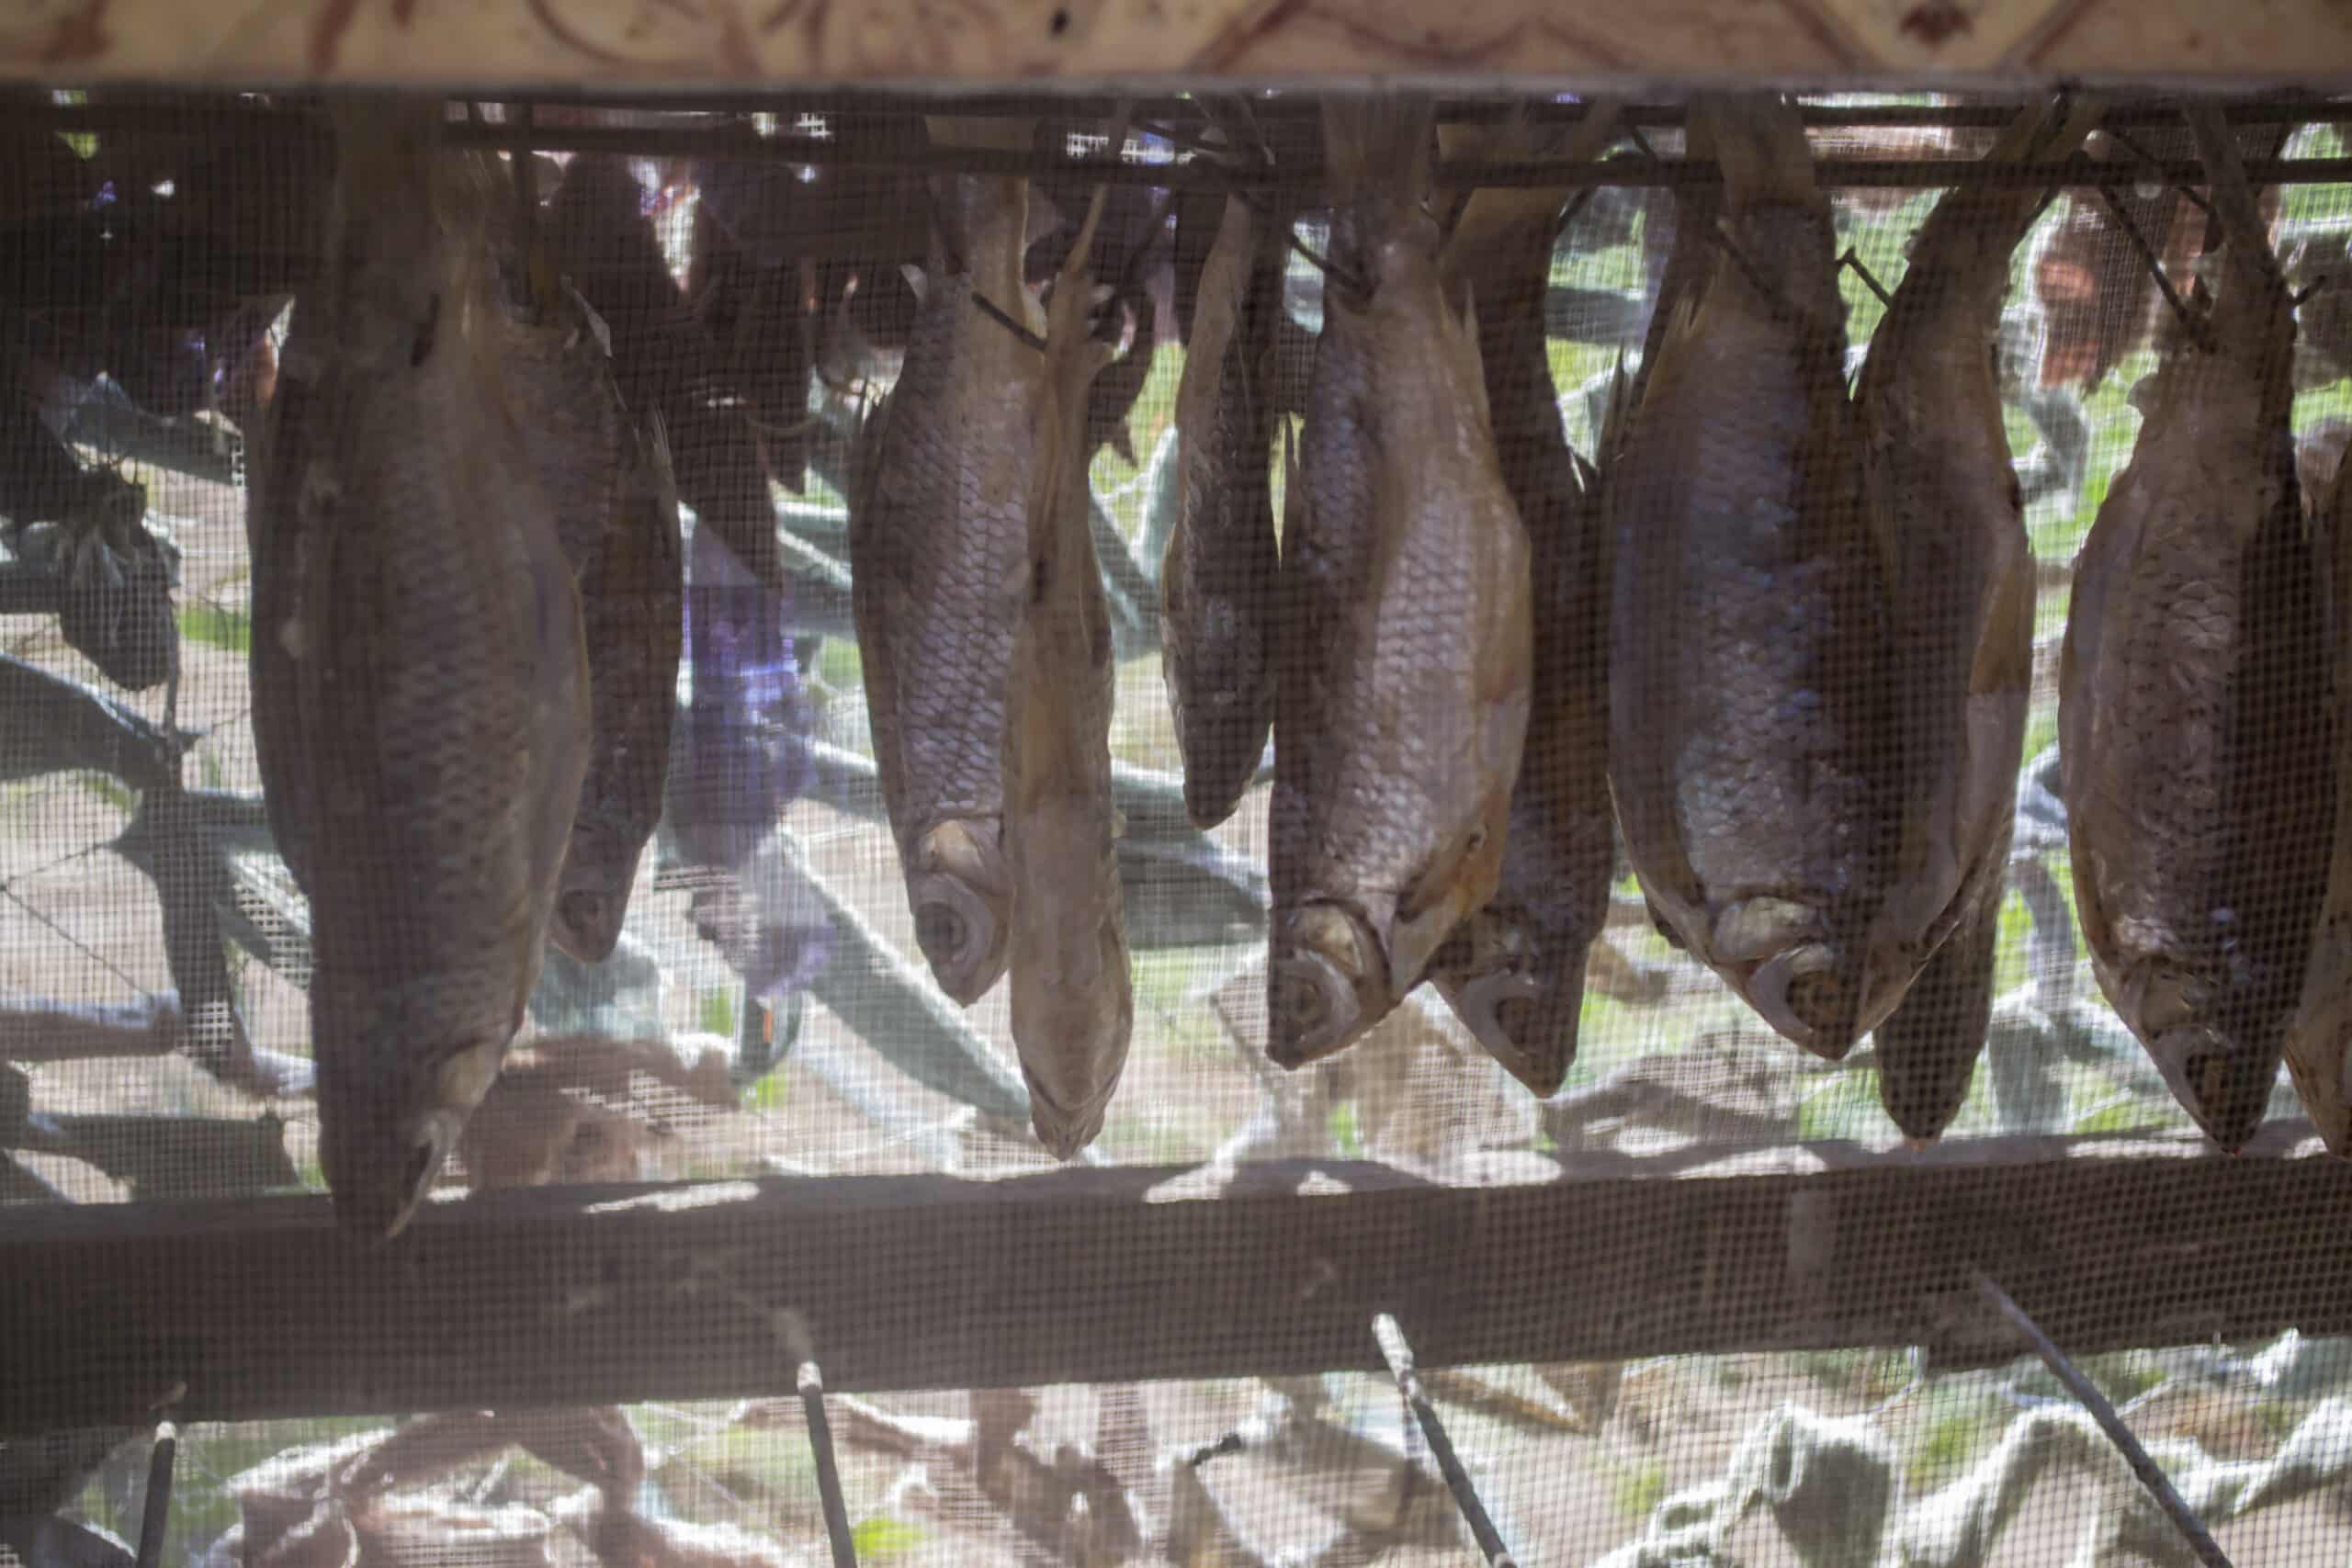 fanatic4fishing.com : How do you store live bait?